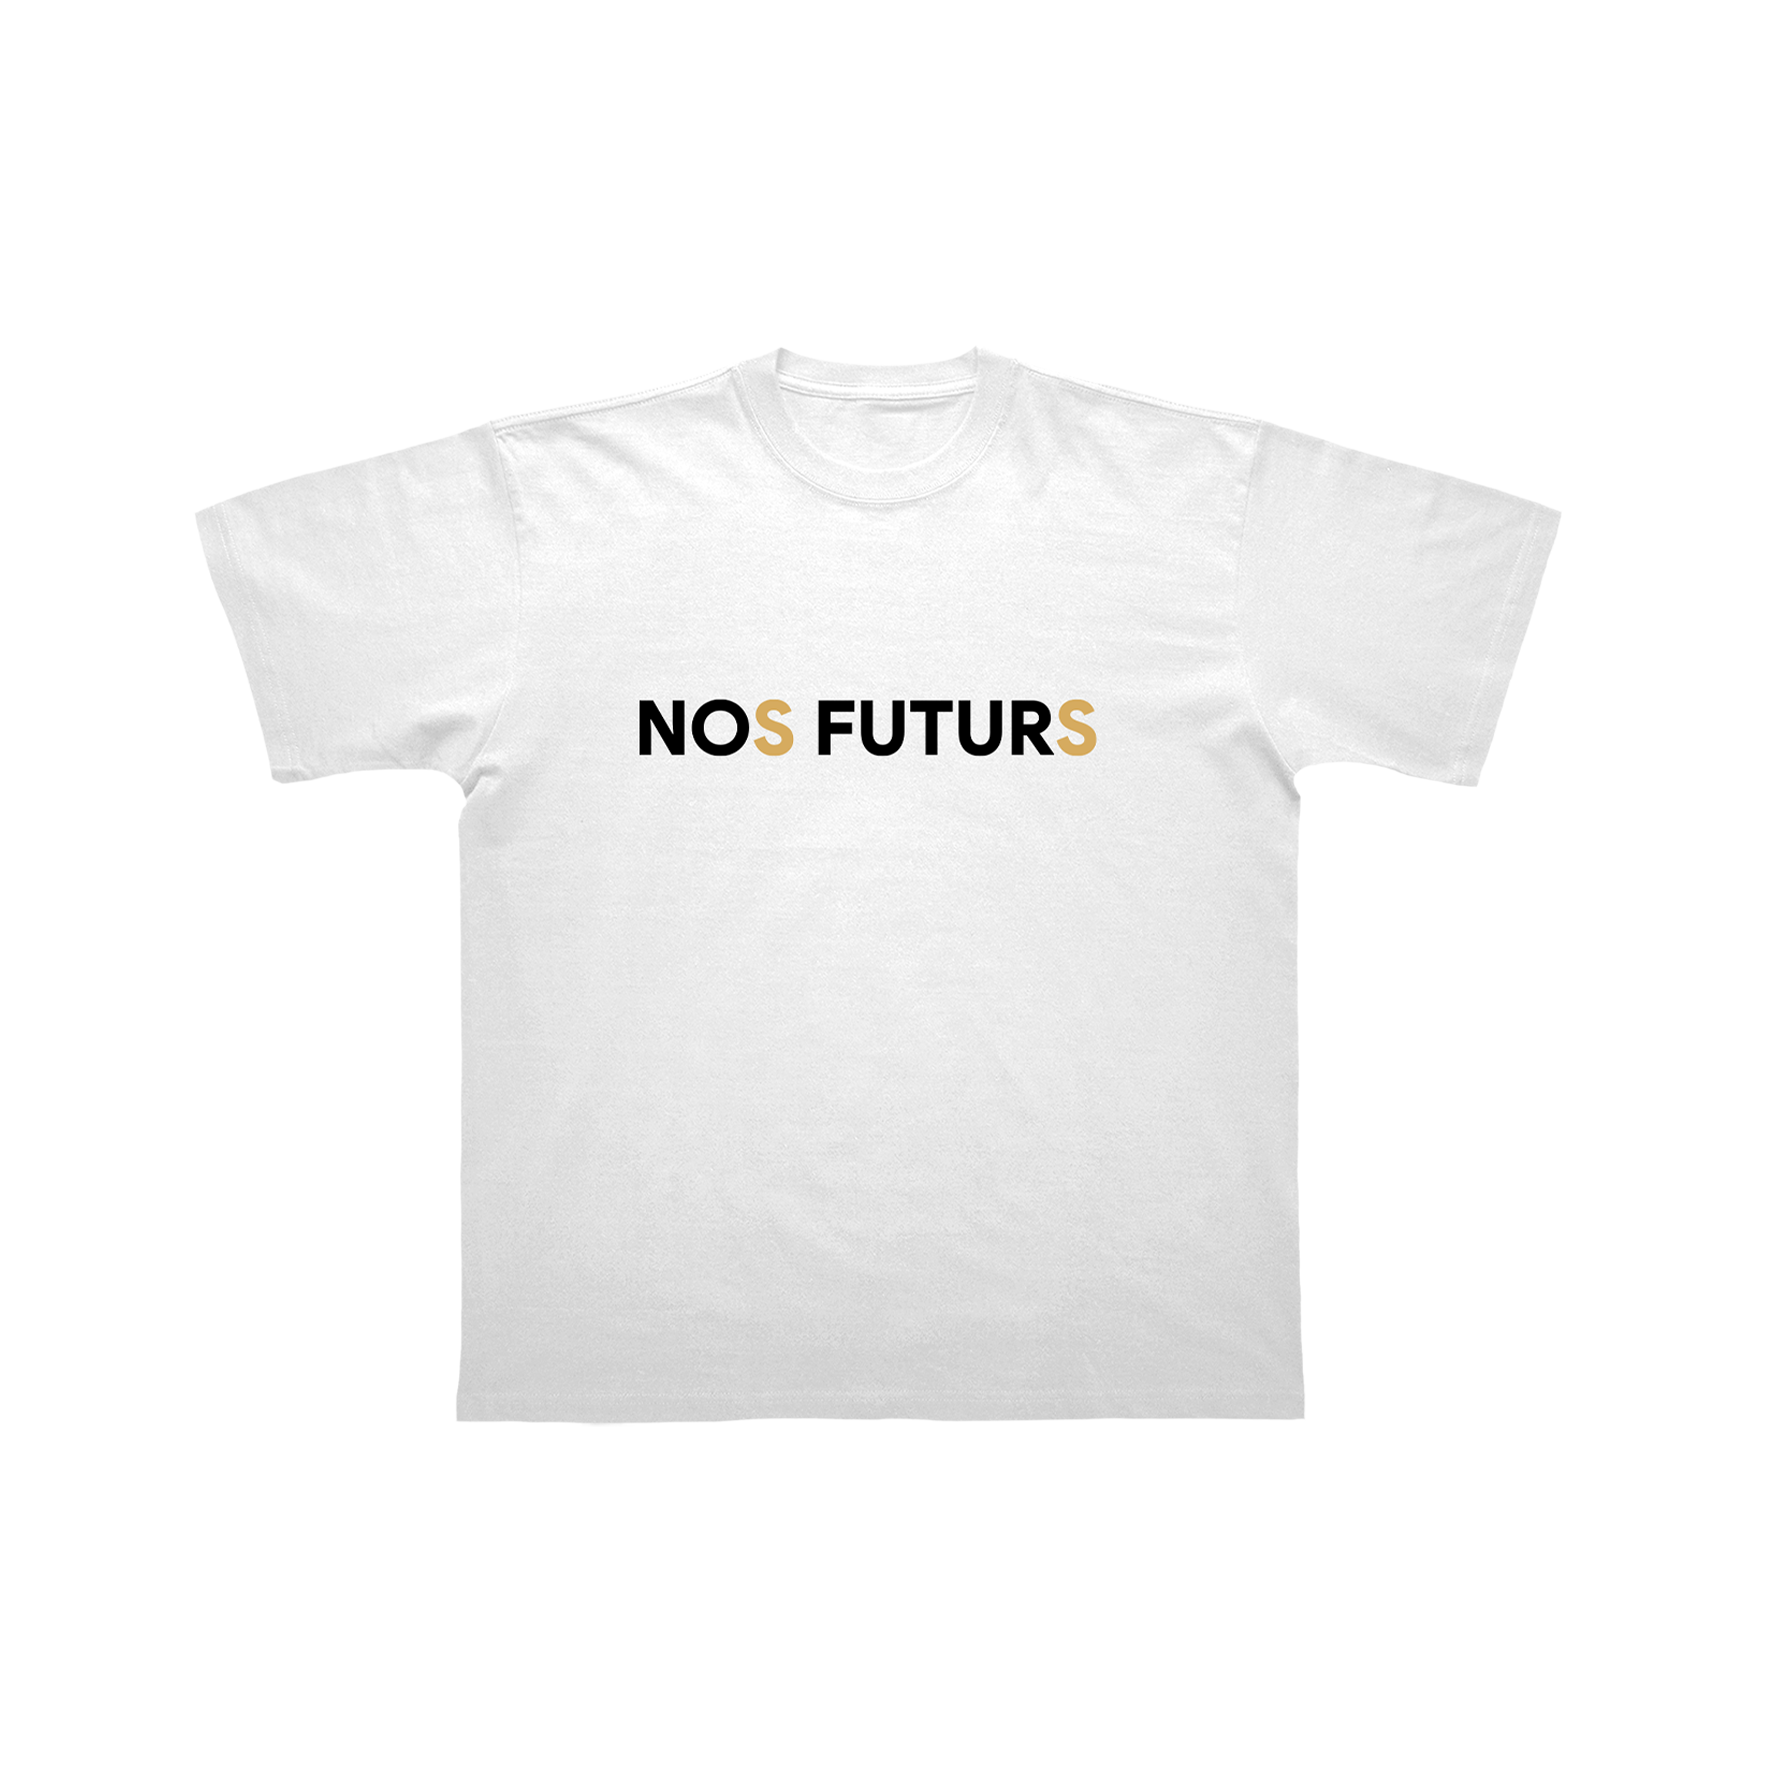 T-SHIRT "NOS FUTURS"